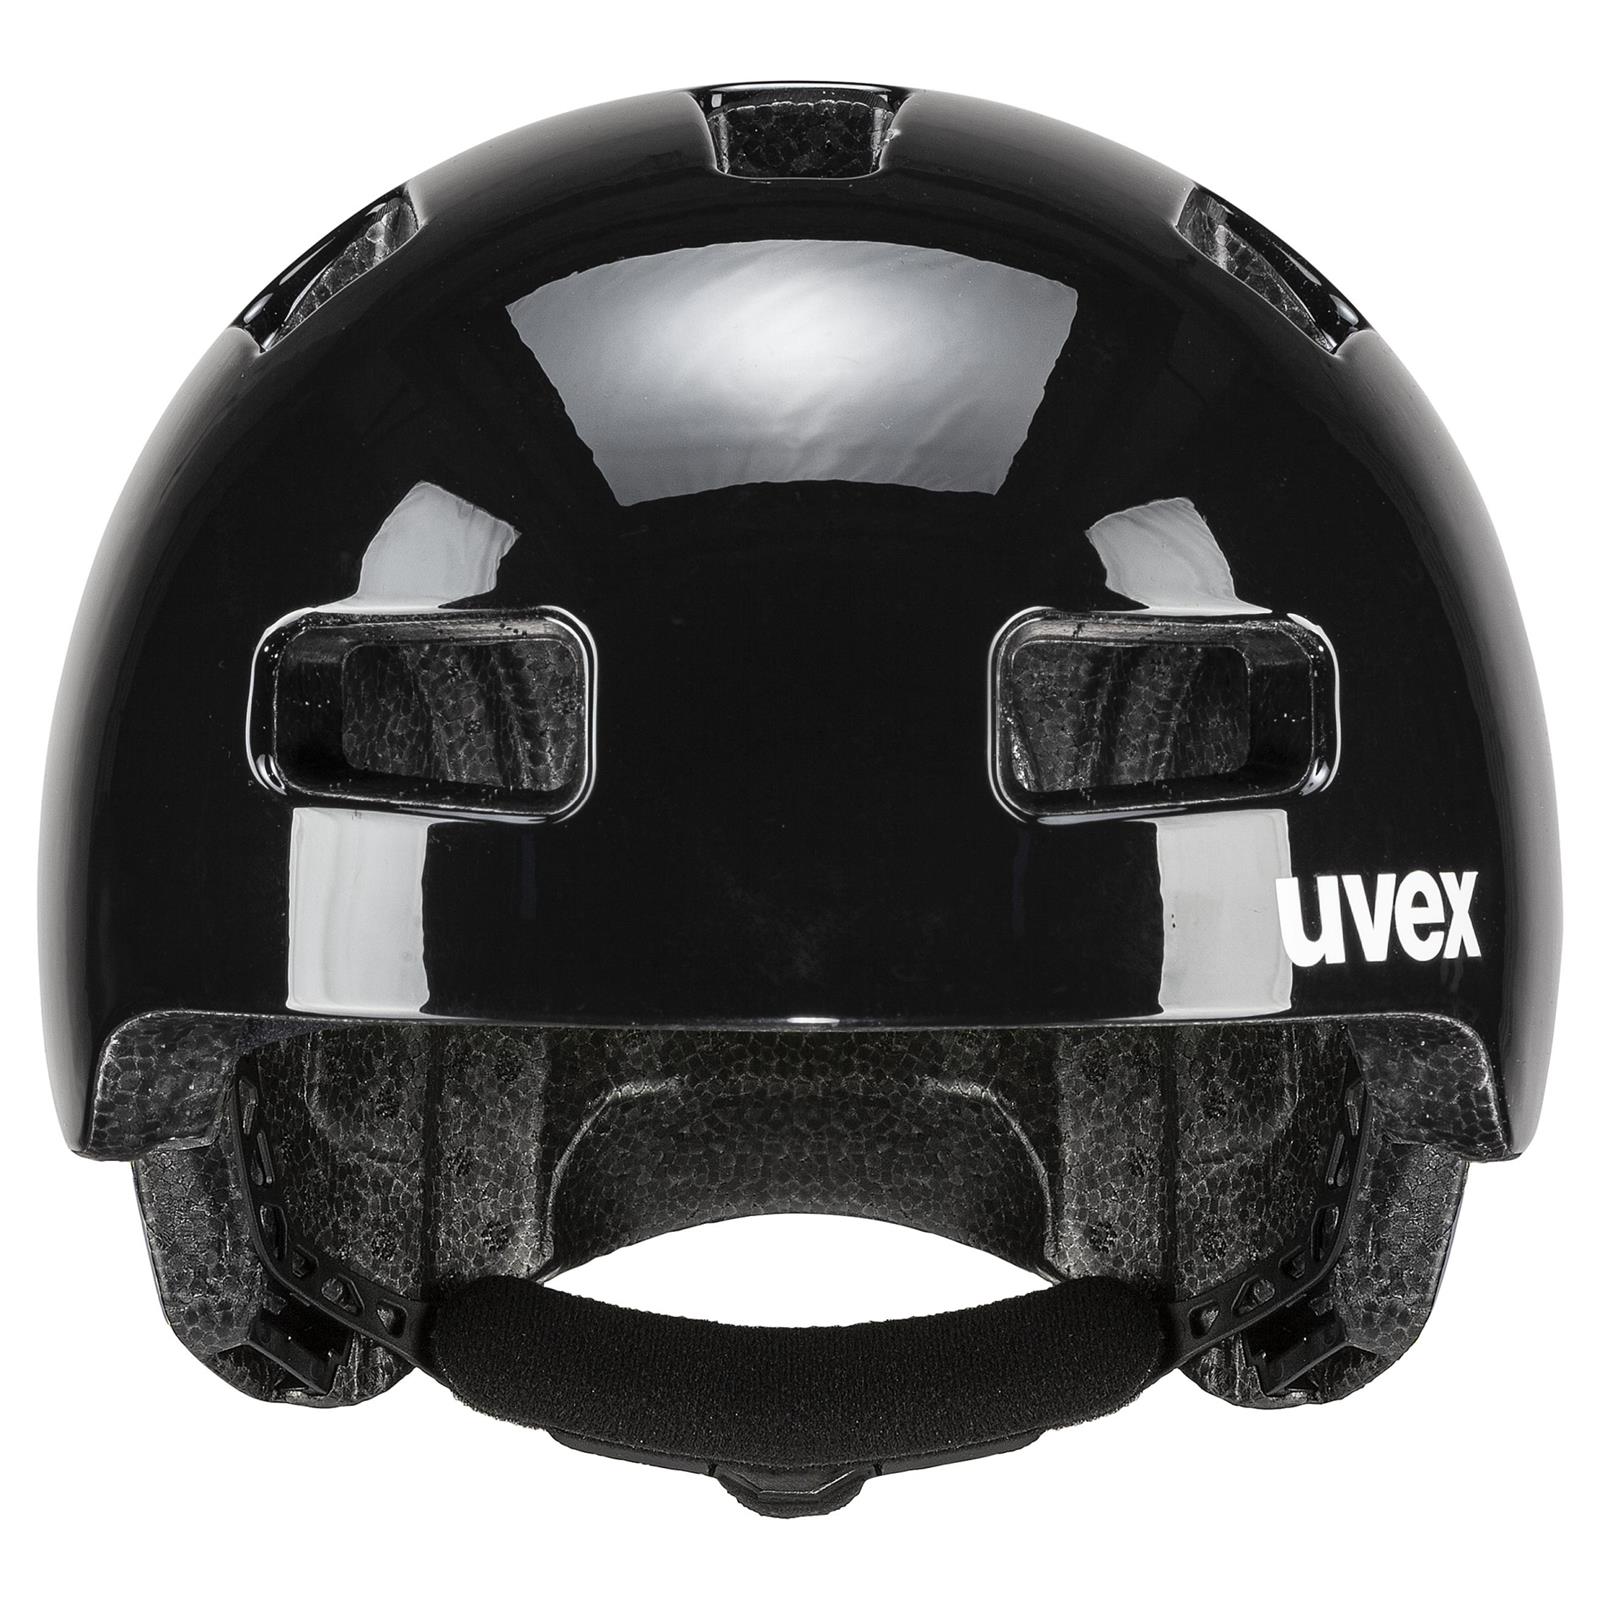 UVEX Hlmt 4 Black (s4109801200)